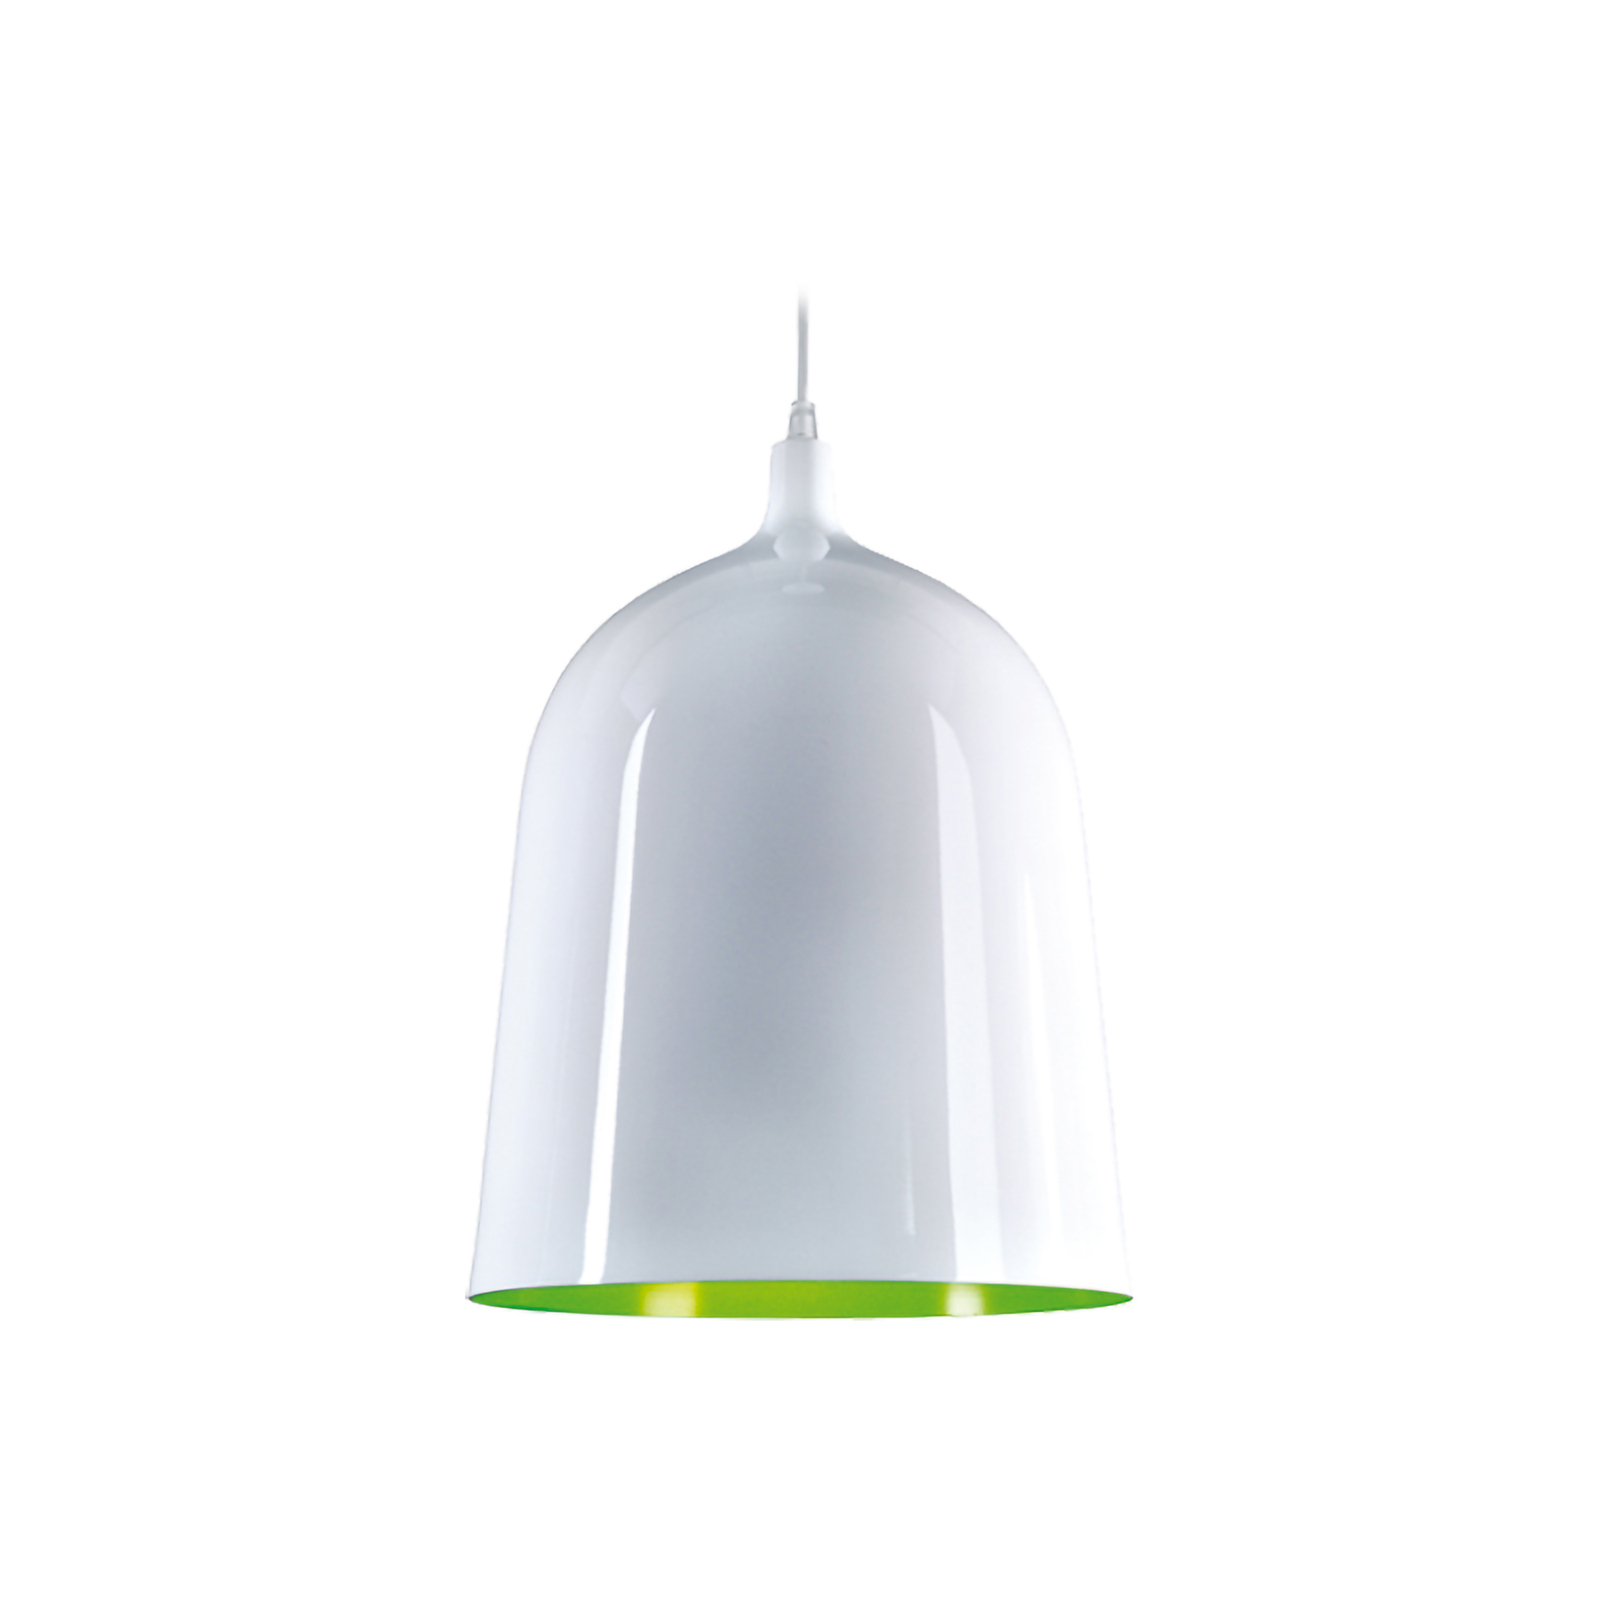 Aluminor Bottle függő lámpa, Ø28cm, fehér/zöld